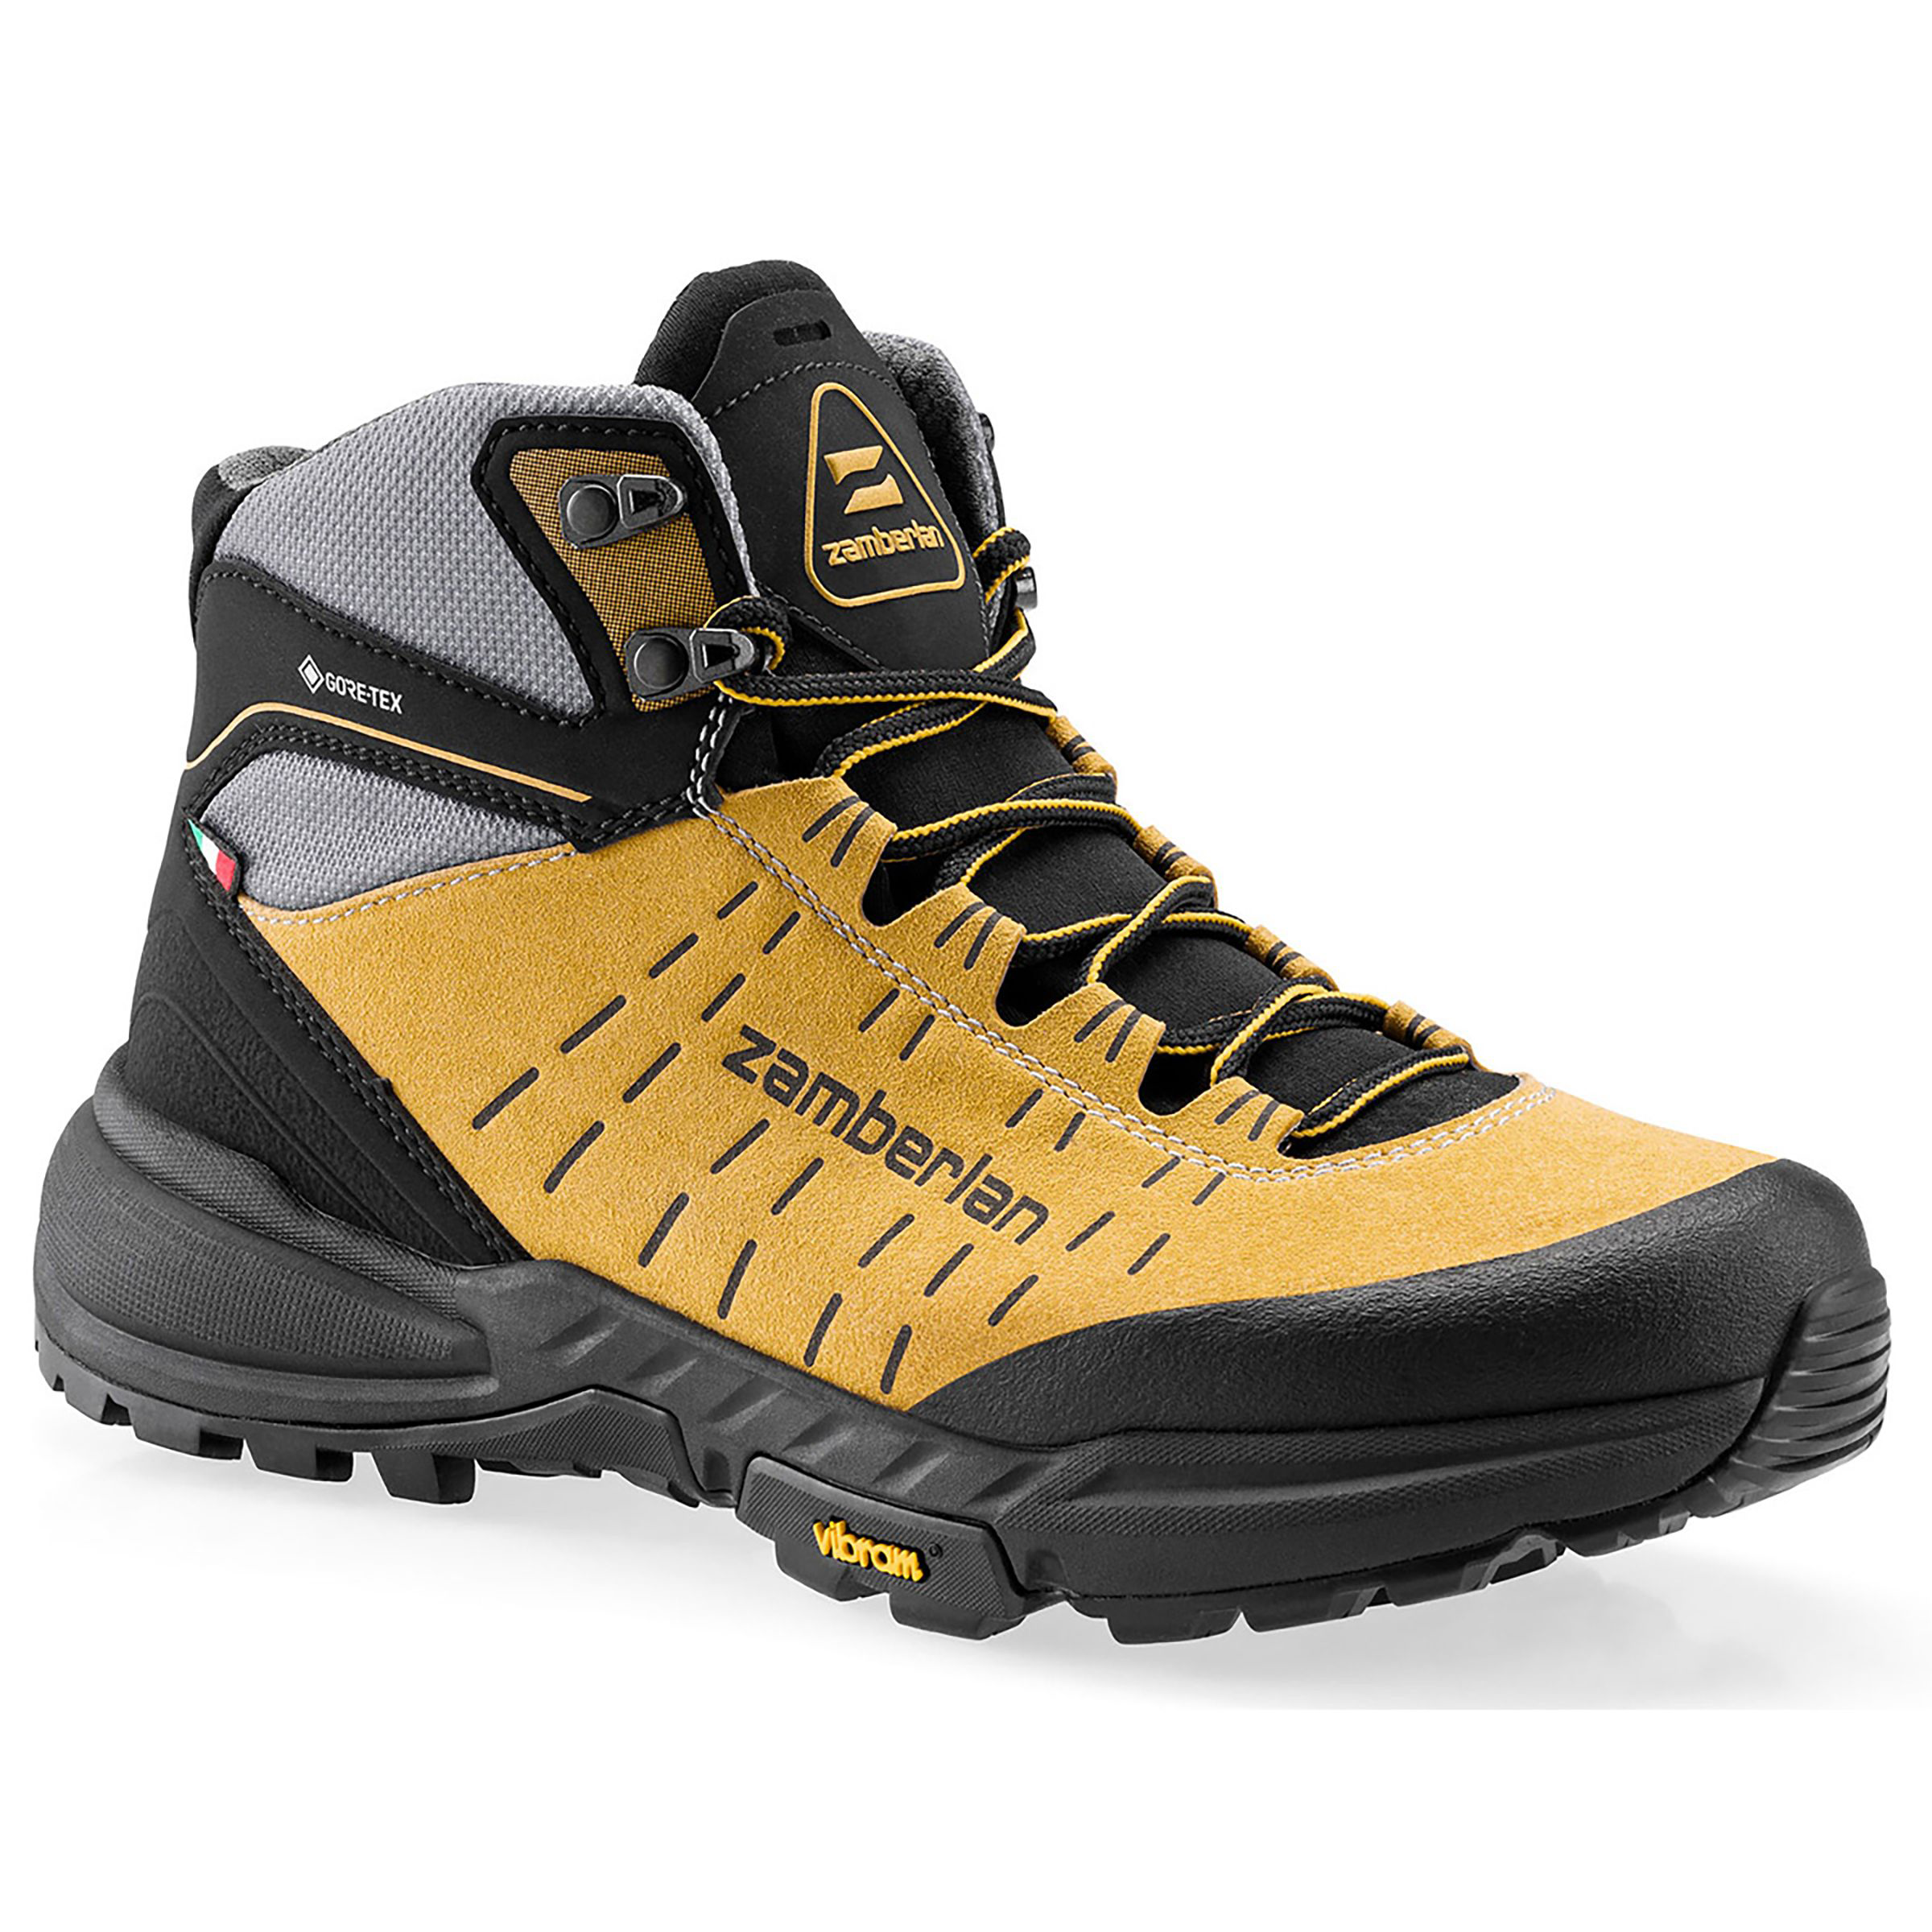 Zamberlan 334 Circe GTX Waterproof Hiking Boots for Ladies